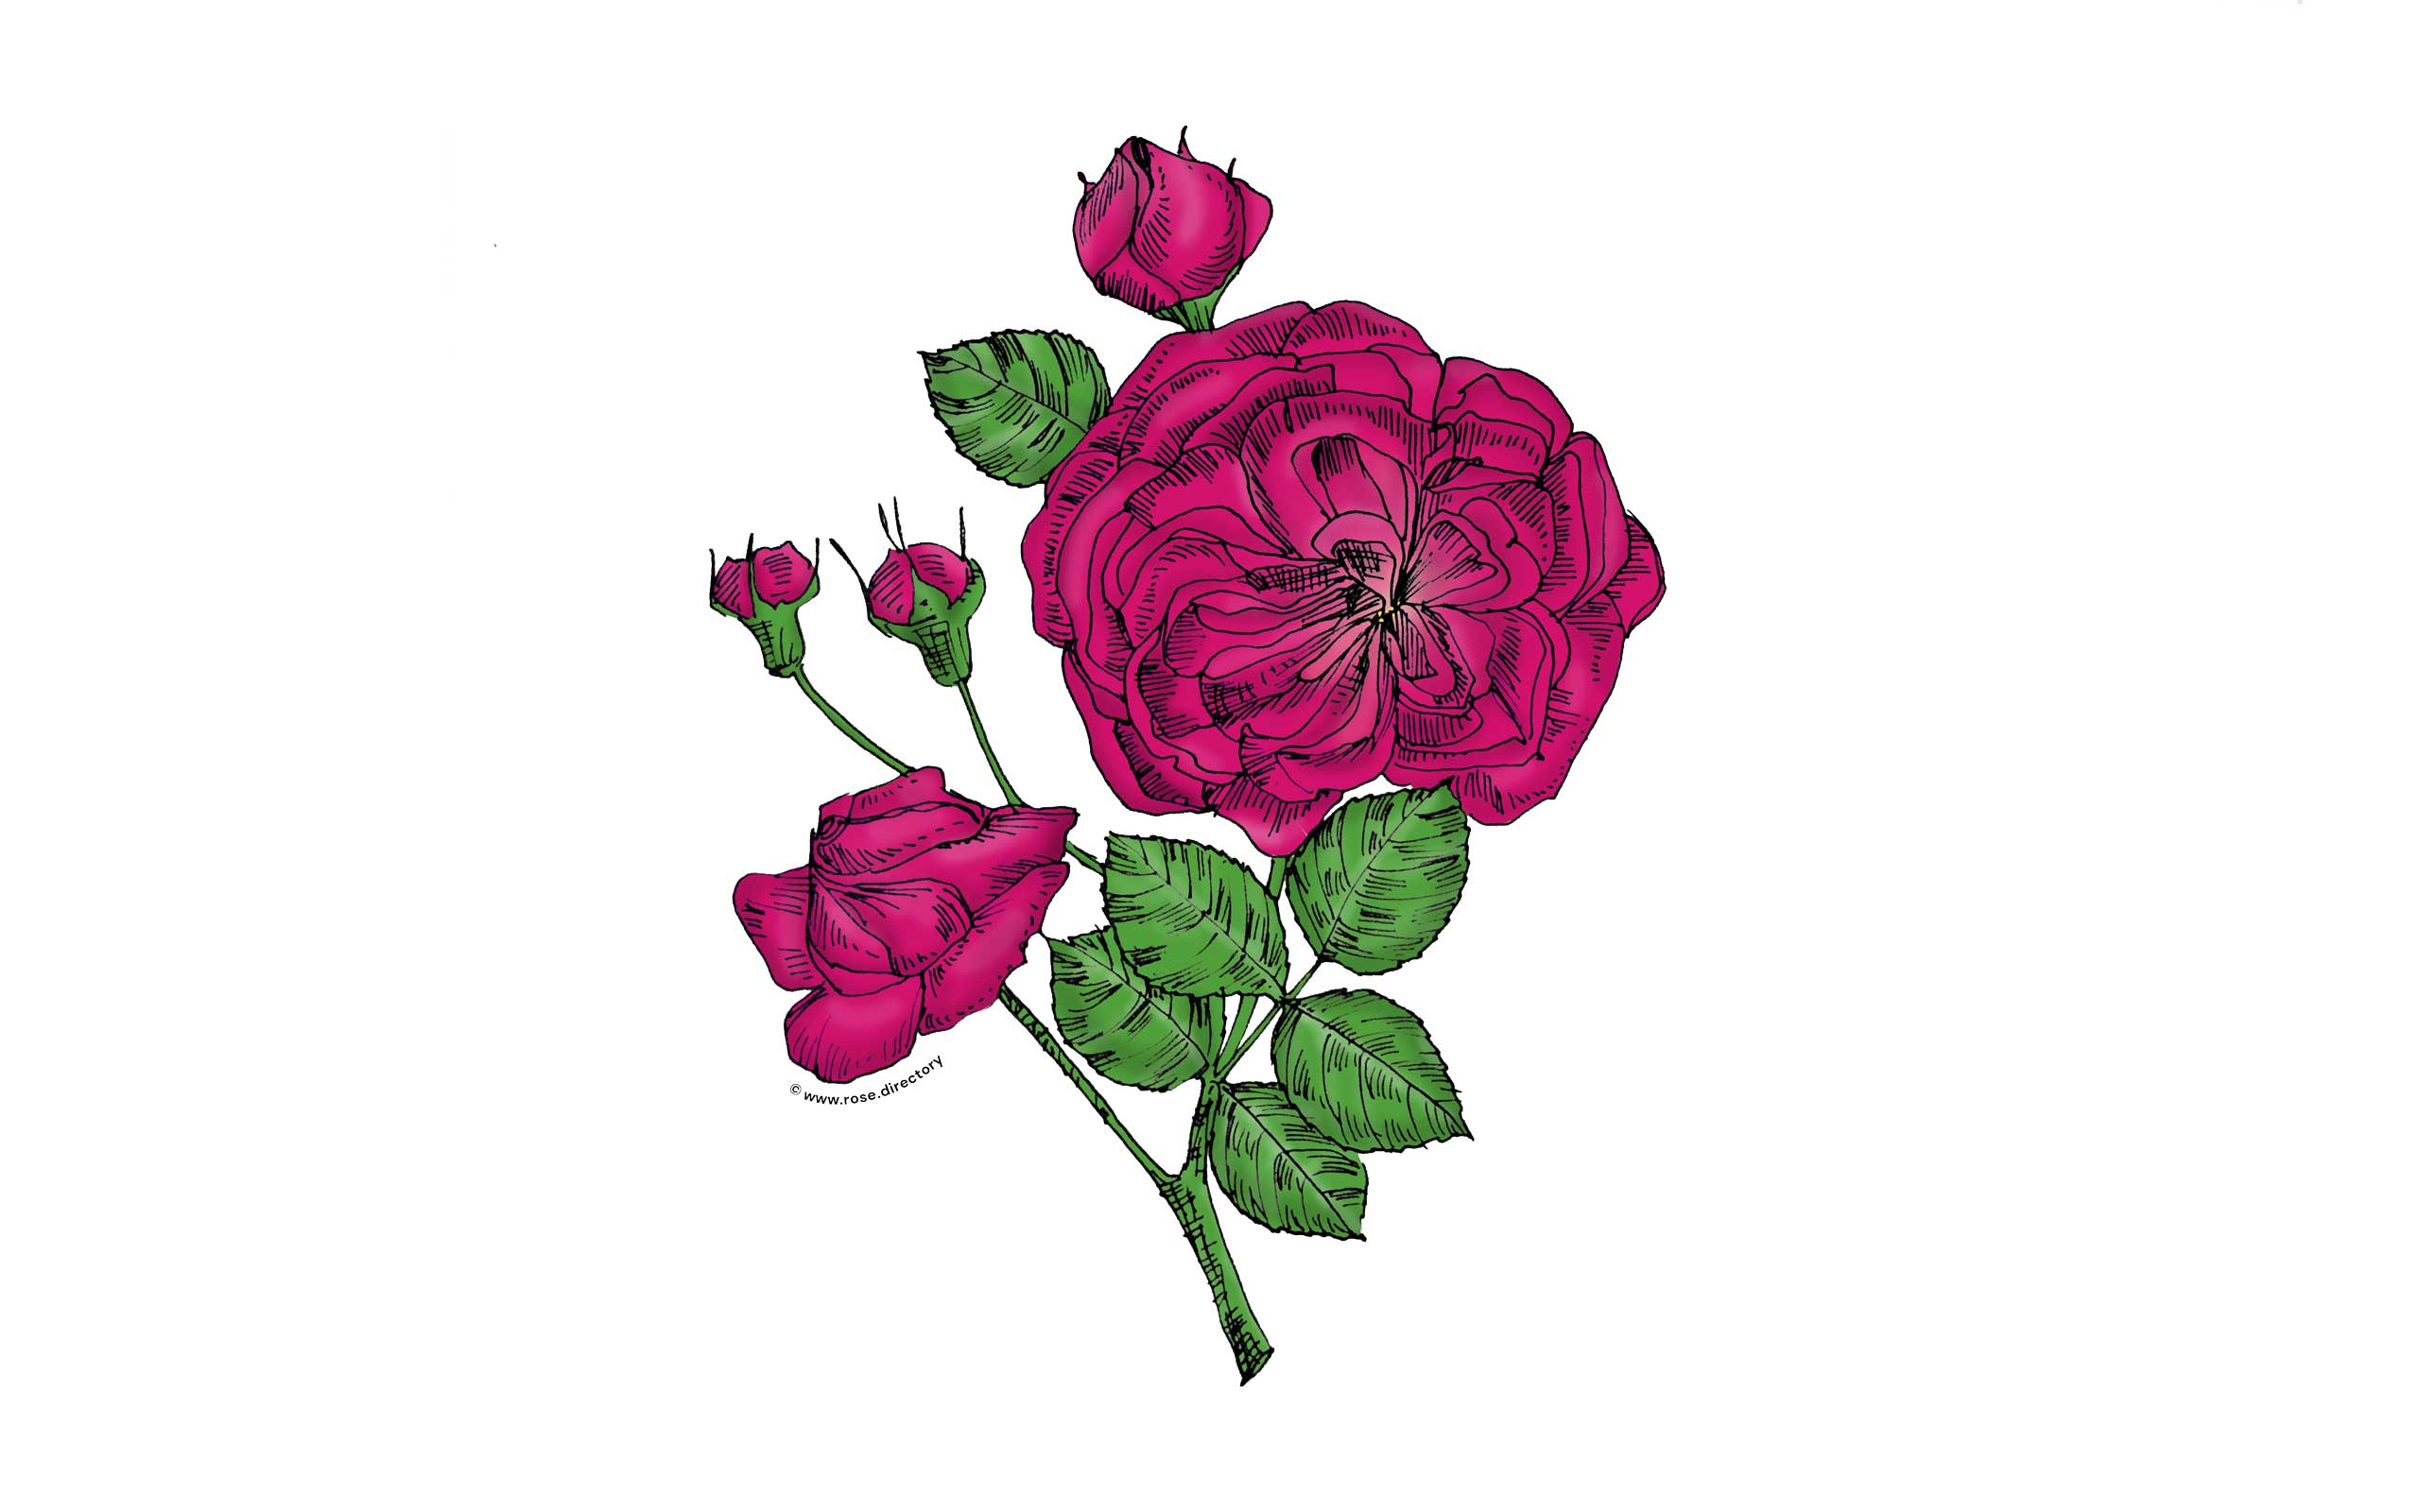 Deep Pink Rosette Rose Bloom Semi-Double 8-15 Petals In 2 Rows